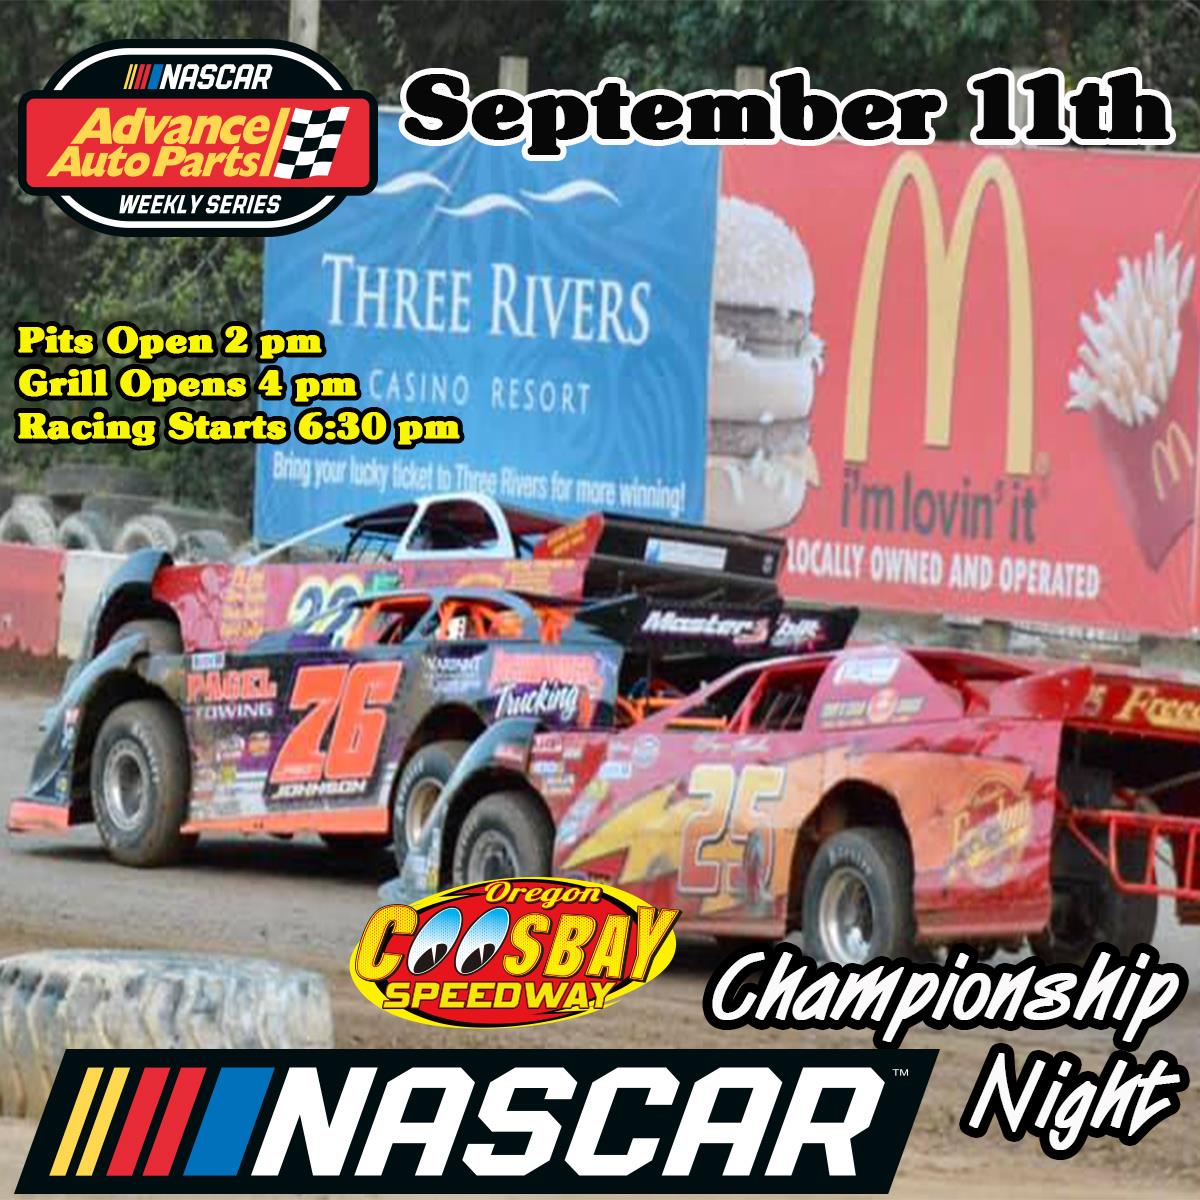 NASCAR Championship Night September 11